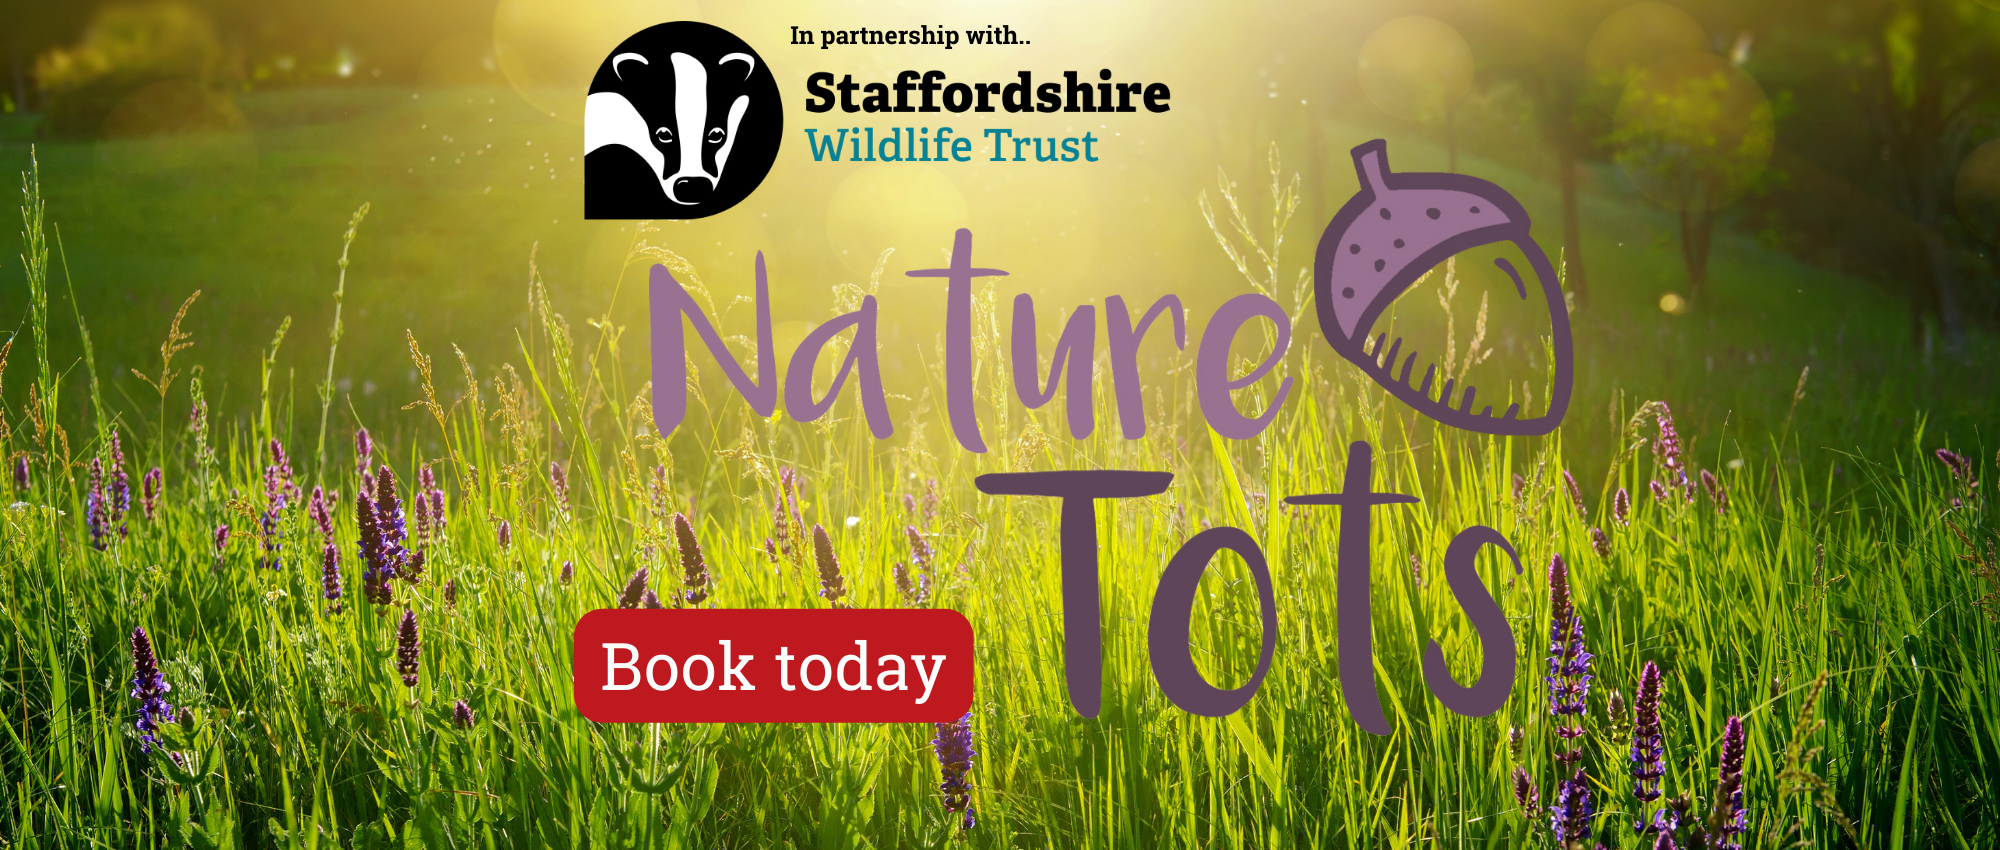 Staffordshire Wildlife Trust